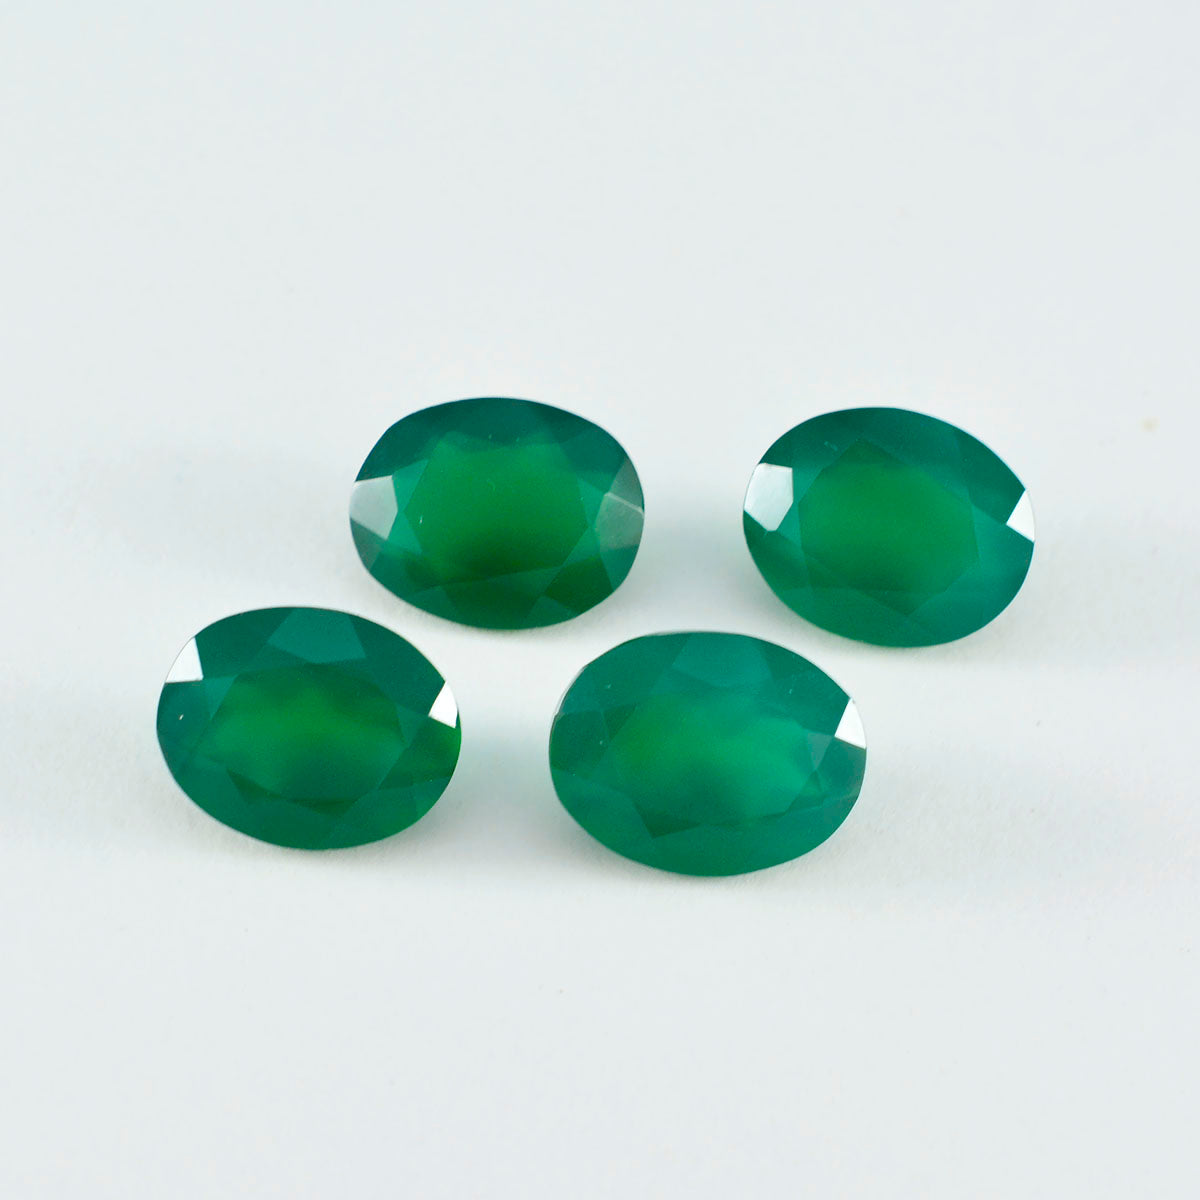 riyogems 1 st äkta grön onyx fasetterad 7x9 mm oval form snygg kvalitetspärla